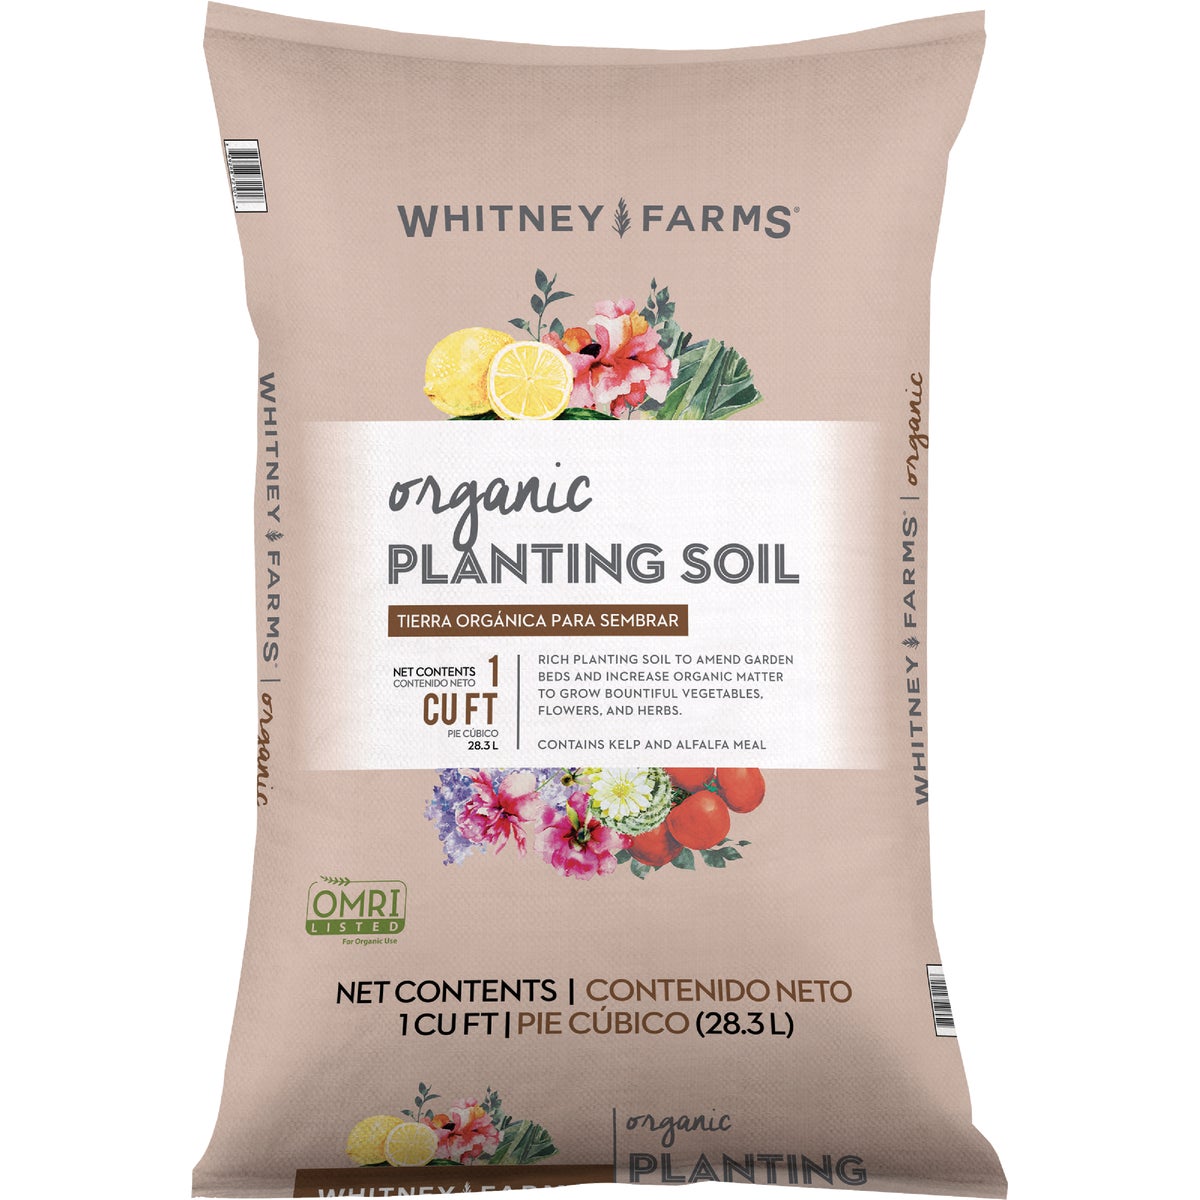 Item 701777, Organic garden soil with a premium blend of organic matter and natural 